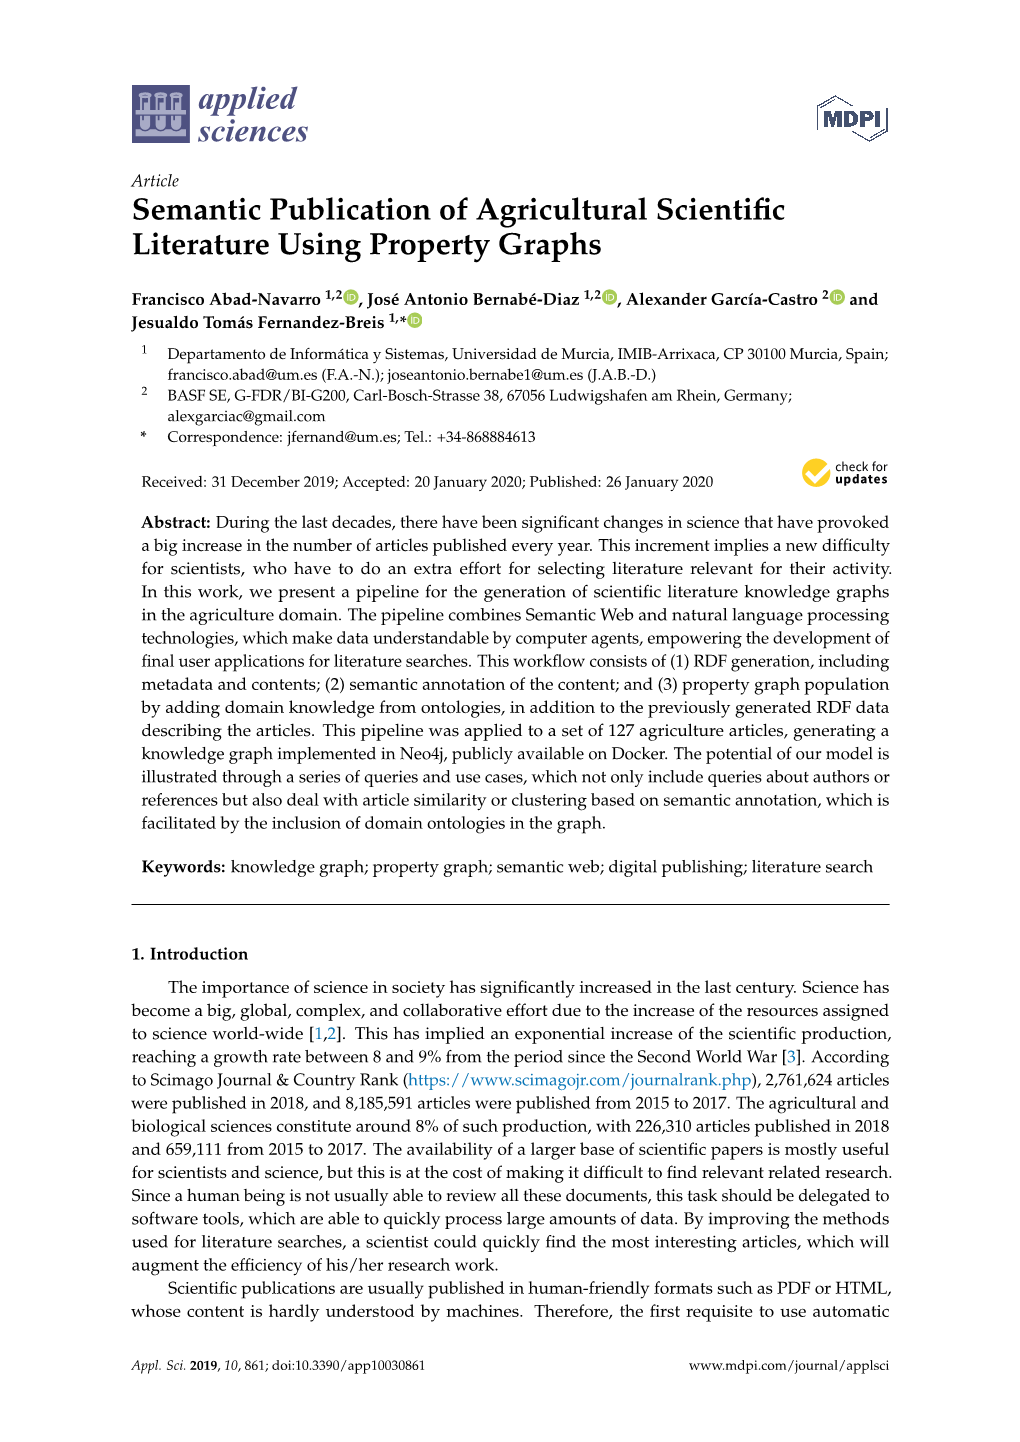 Semantic Publication of Agricultural Scientific Literature Using Property